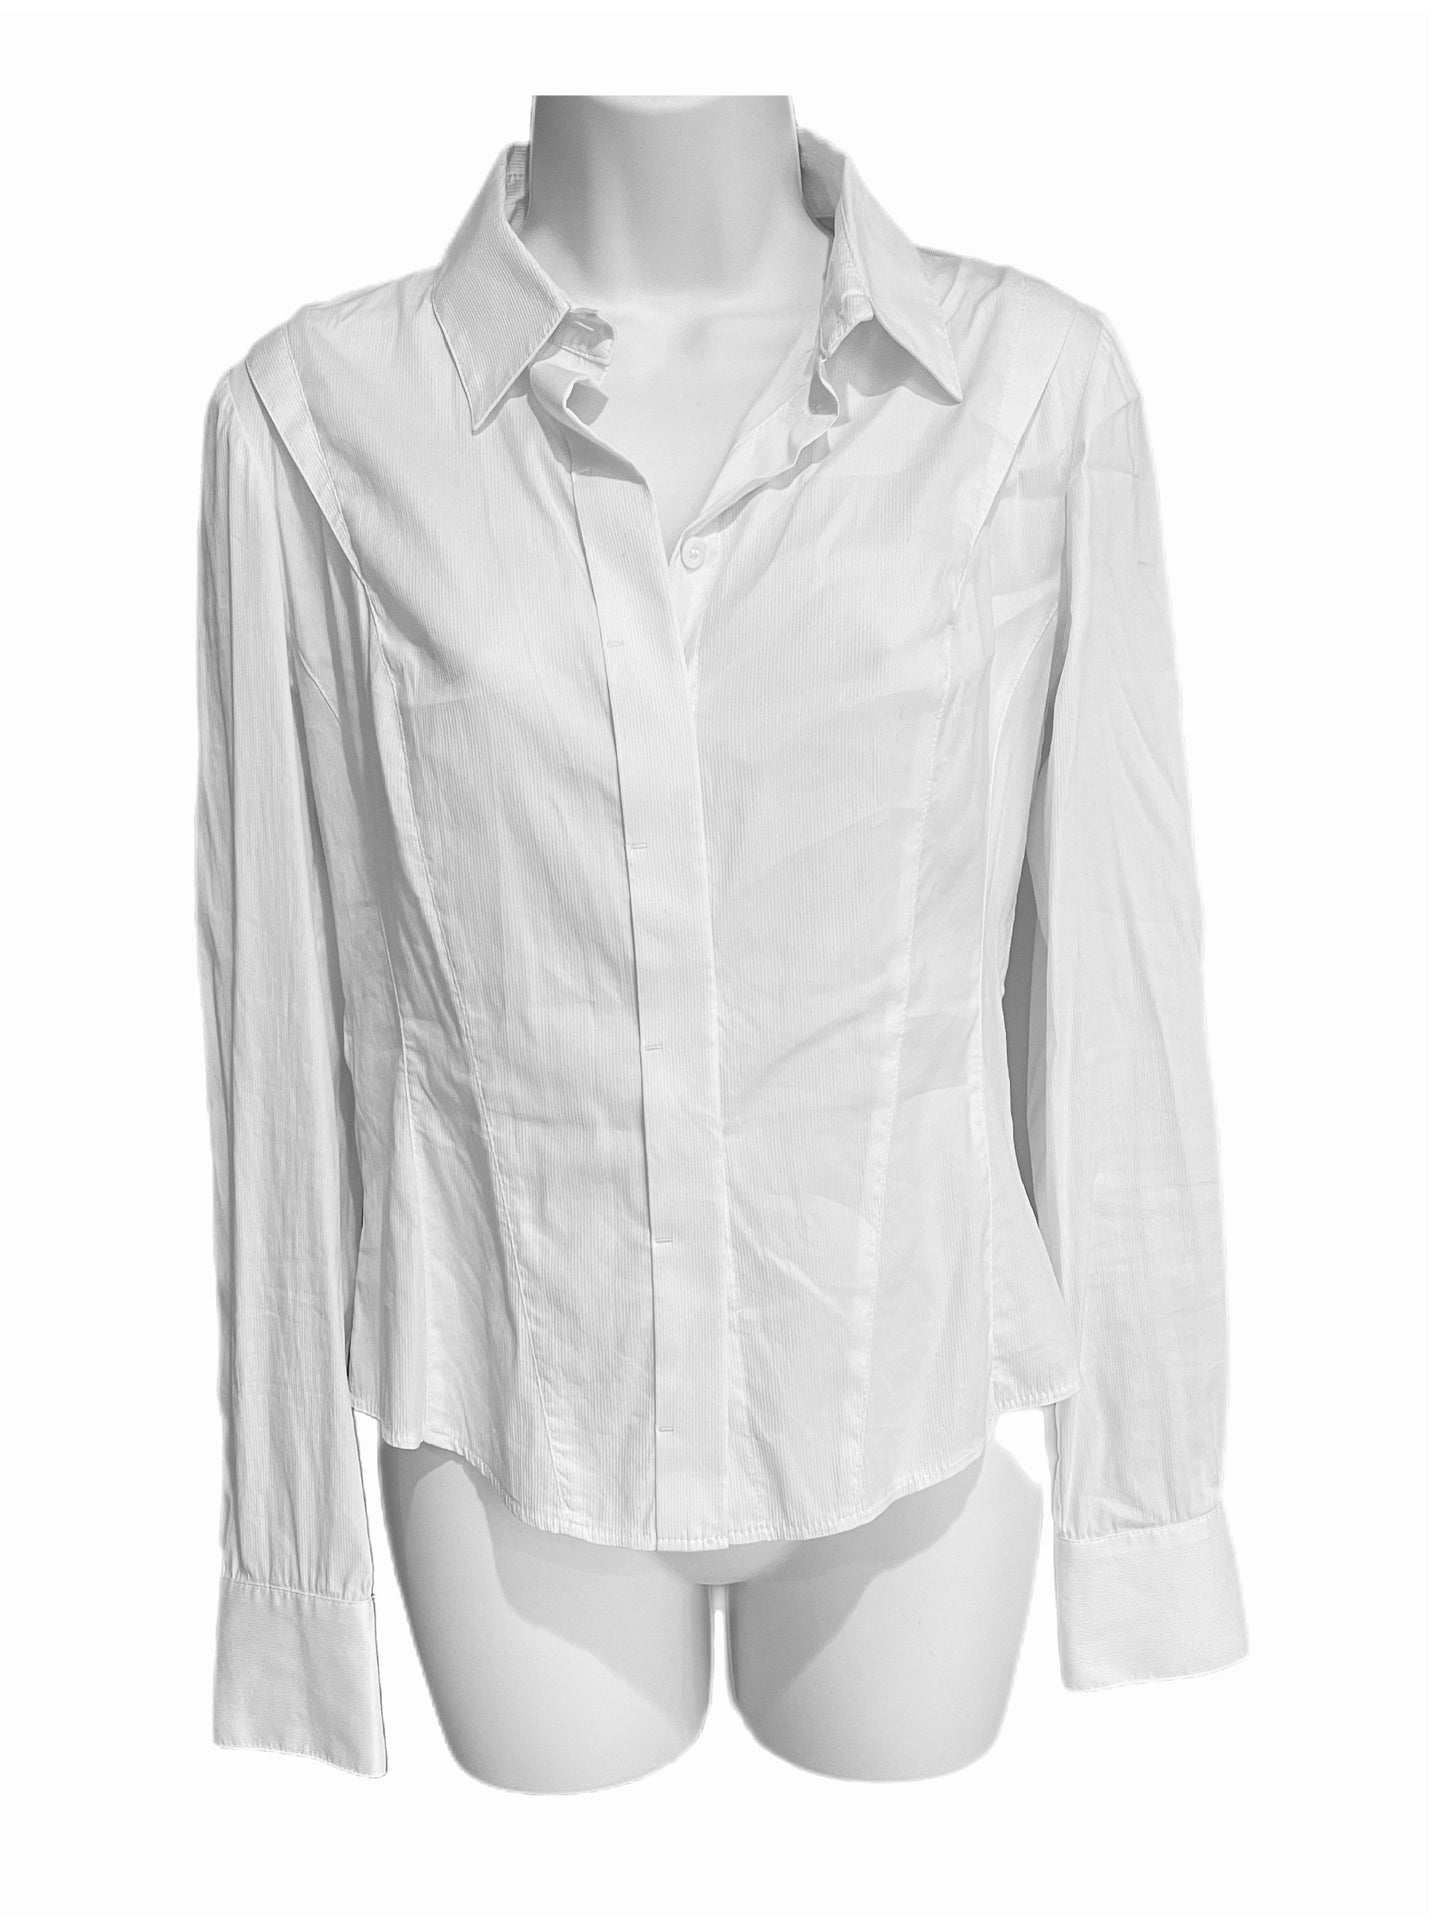 Shirt-White Long Sleeve/Ribbed Button Down w/Mesh Backing By Karen Millen